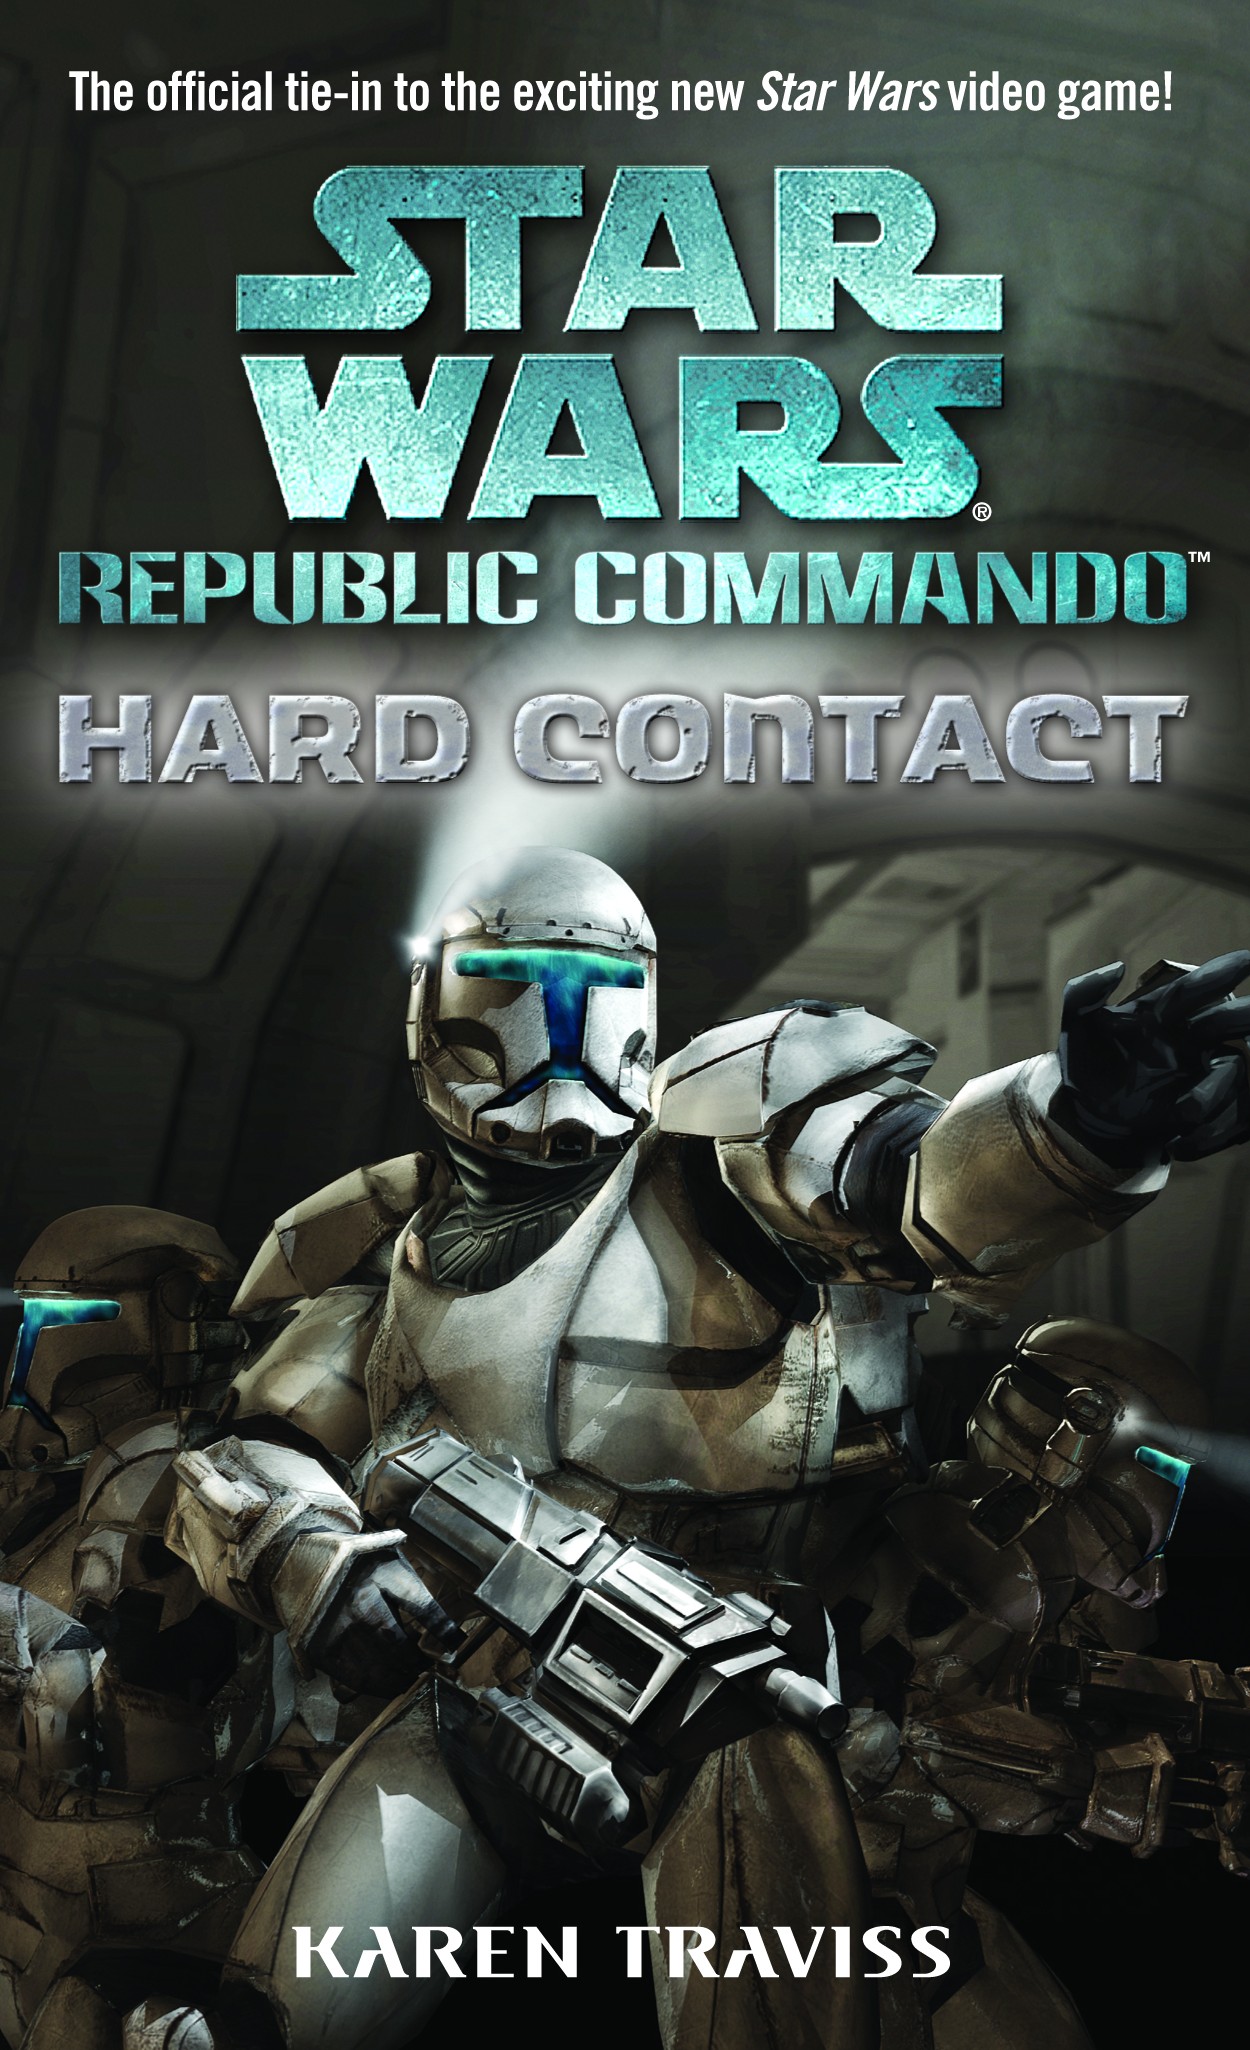 star wars republic commando crash on new game